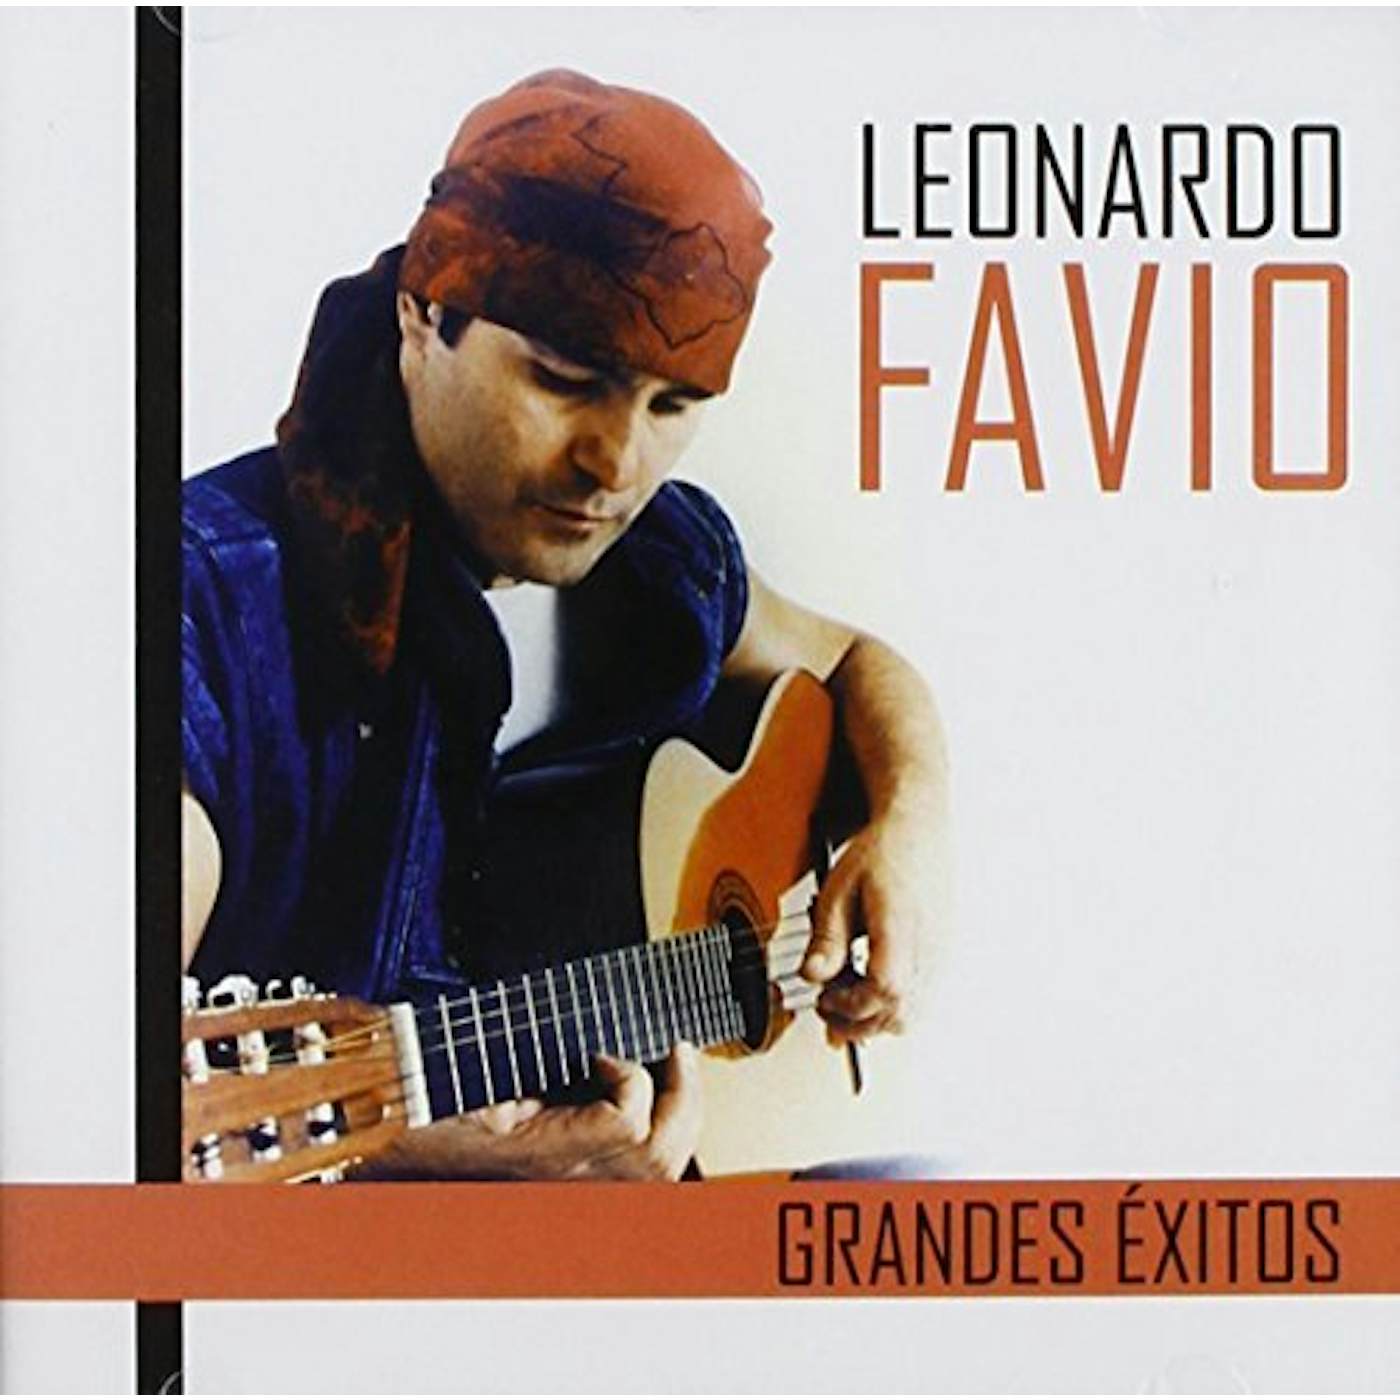 Leonardo Favio GRANDES EXITOS CD